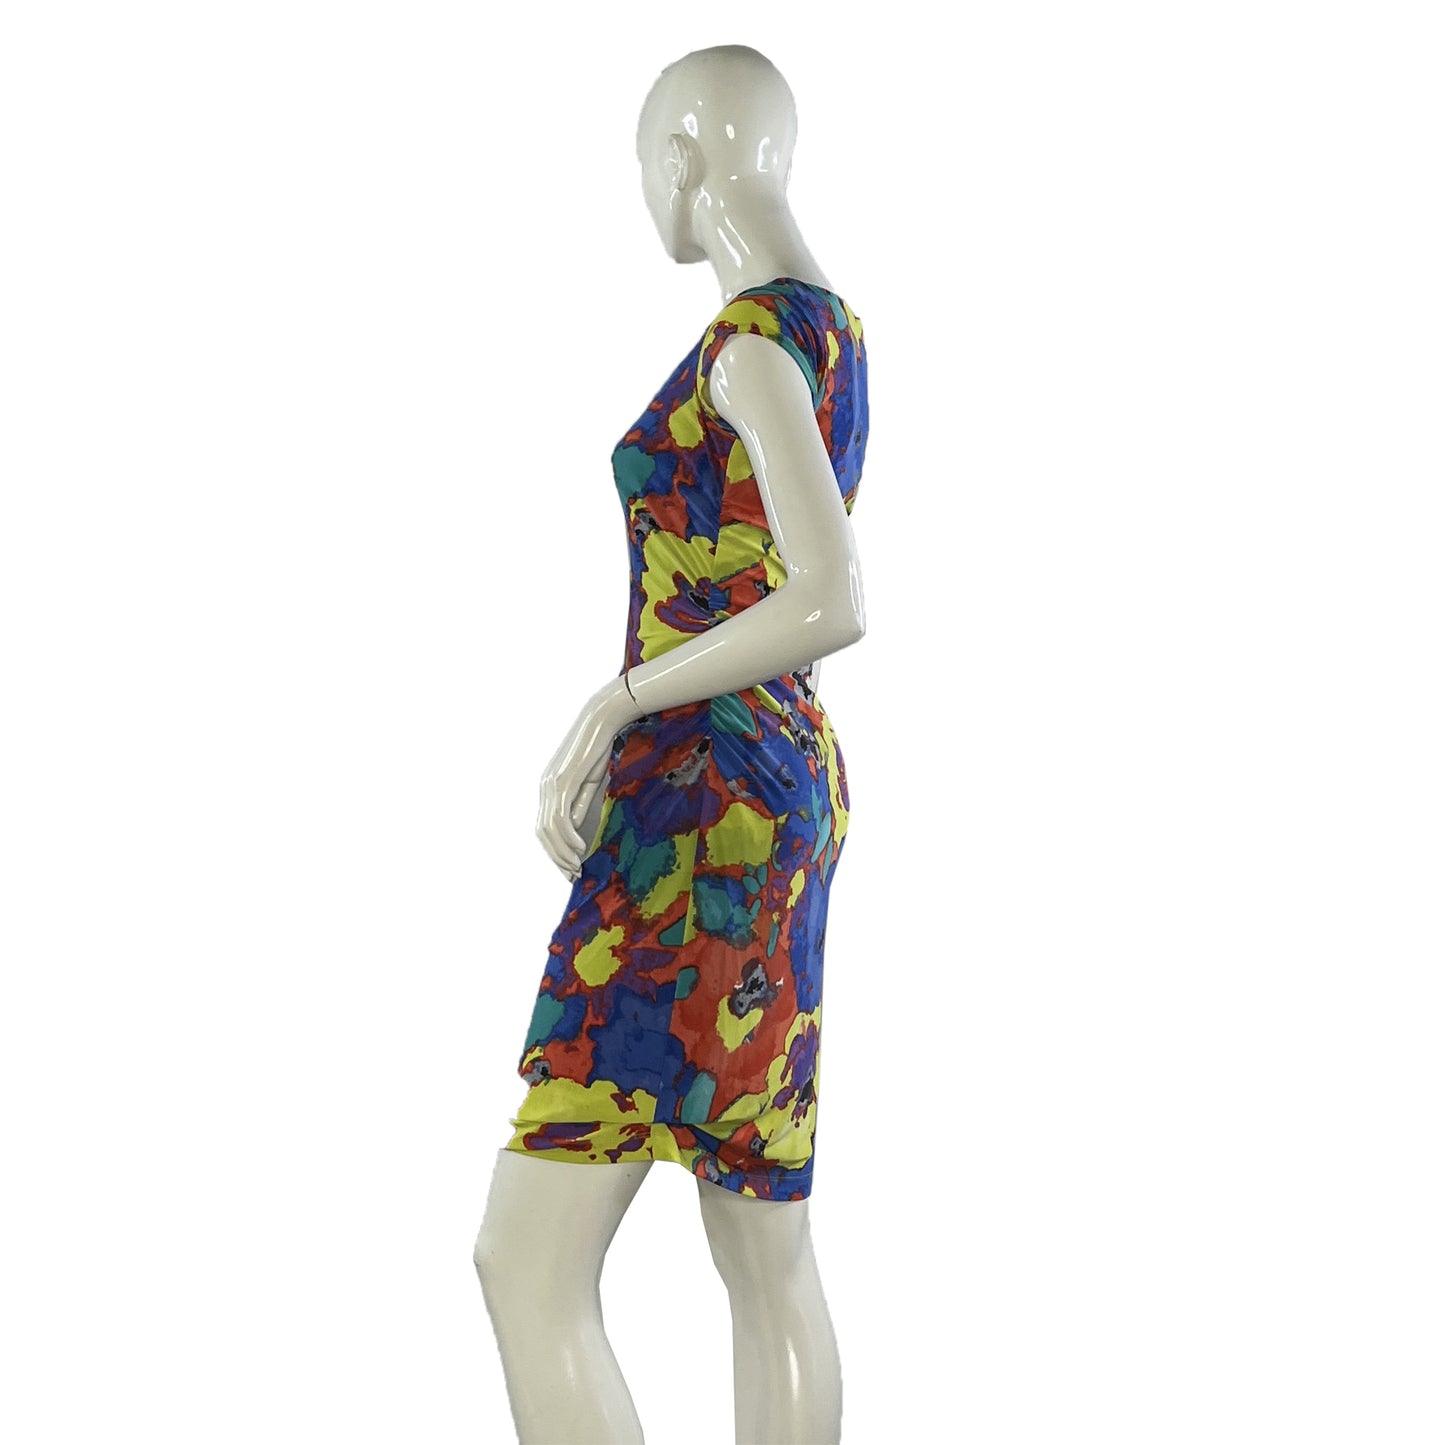 Jones NY Dress  Abstract Pattern Red, Blue, Yellow, Teal Sz 4 SKU 000414